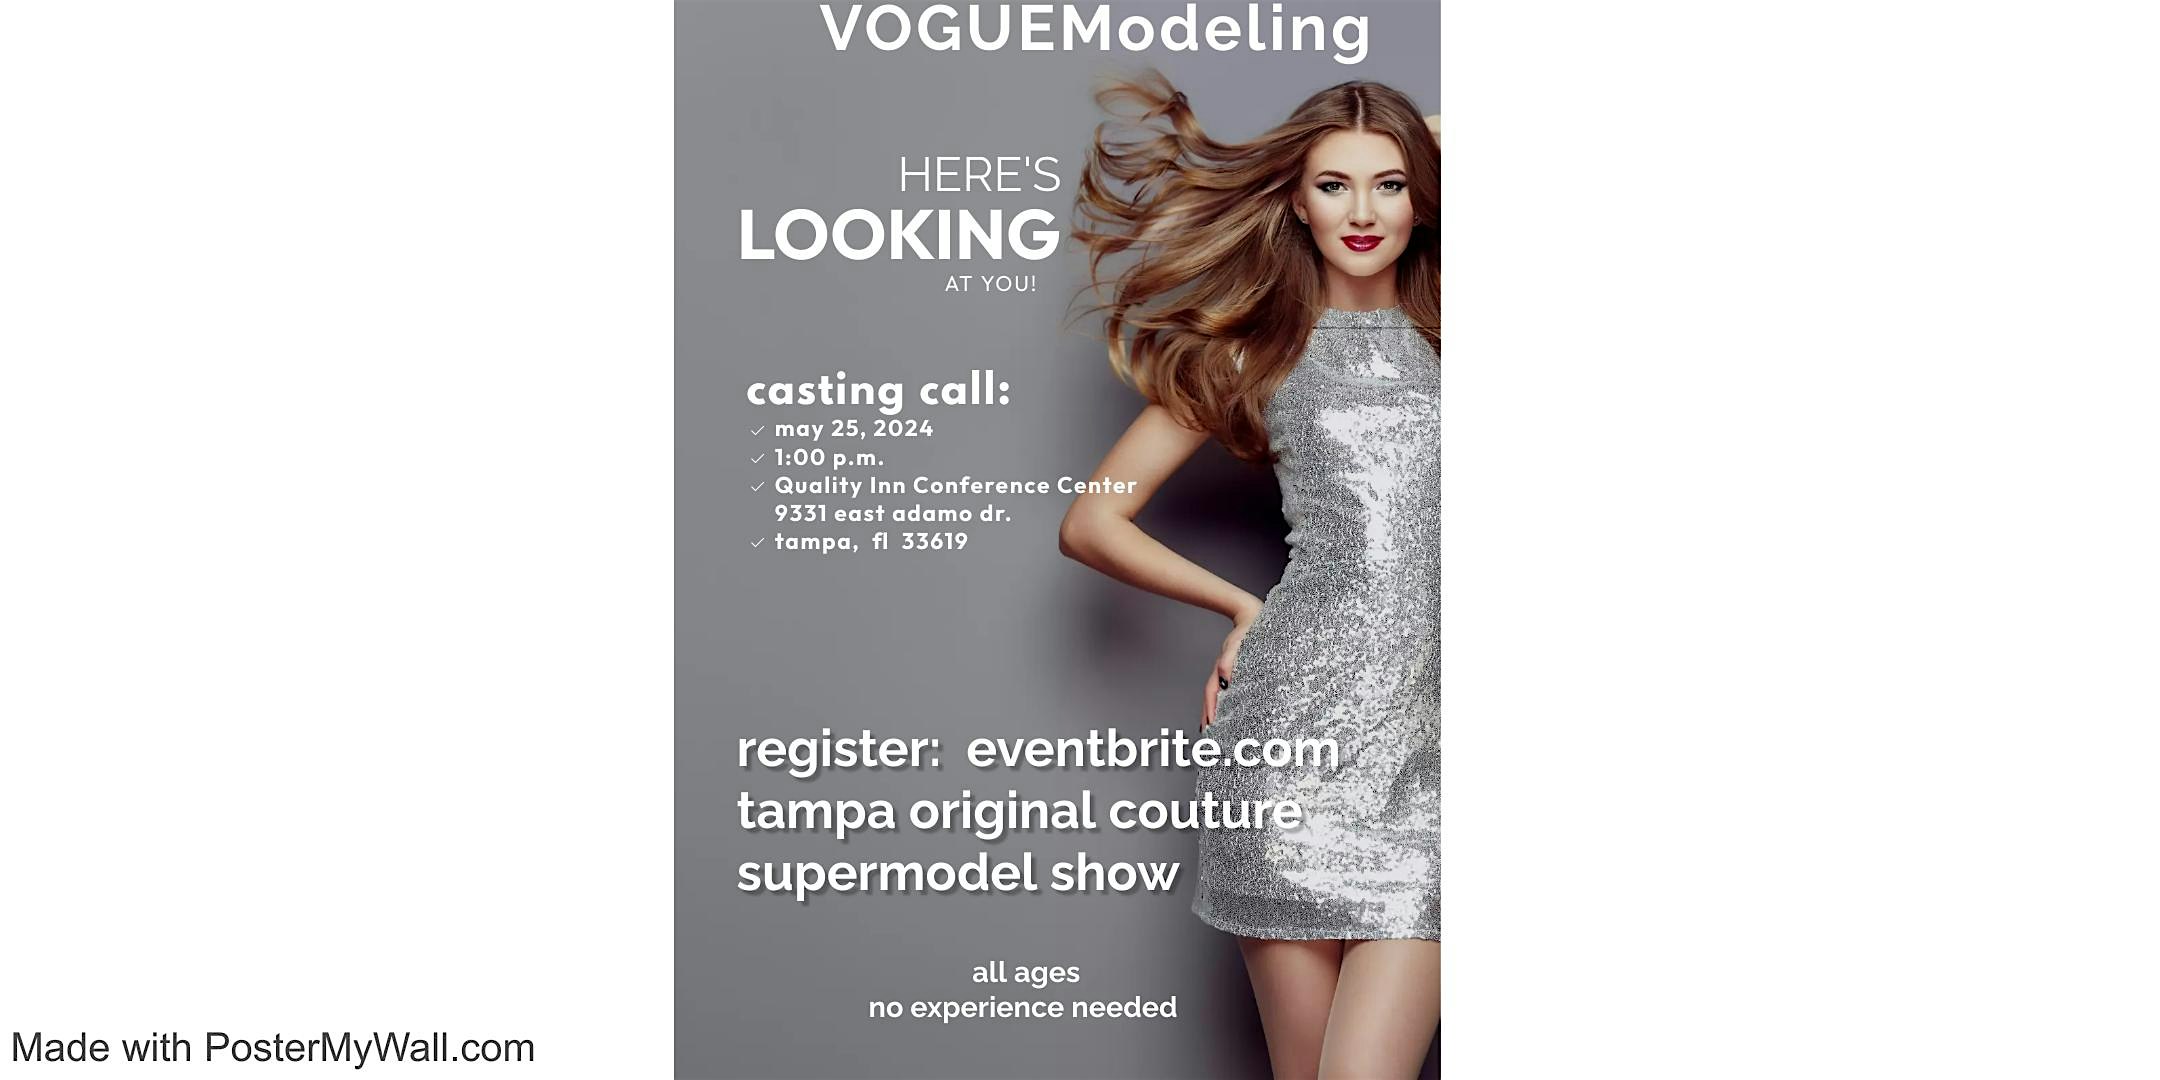 Casting Call for the Tampa Original Couture SuperModel Fashion Event